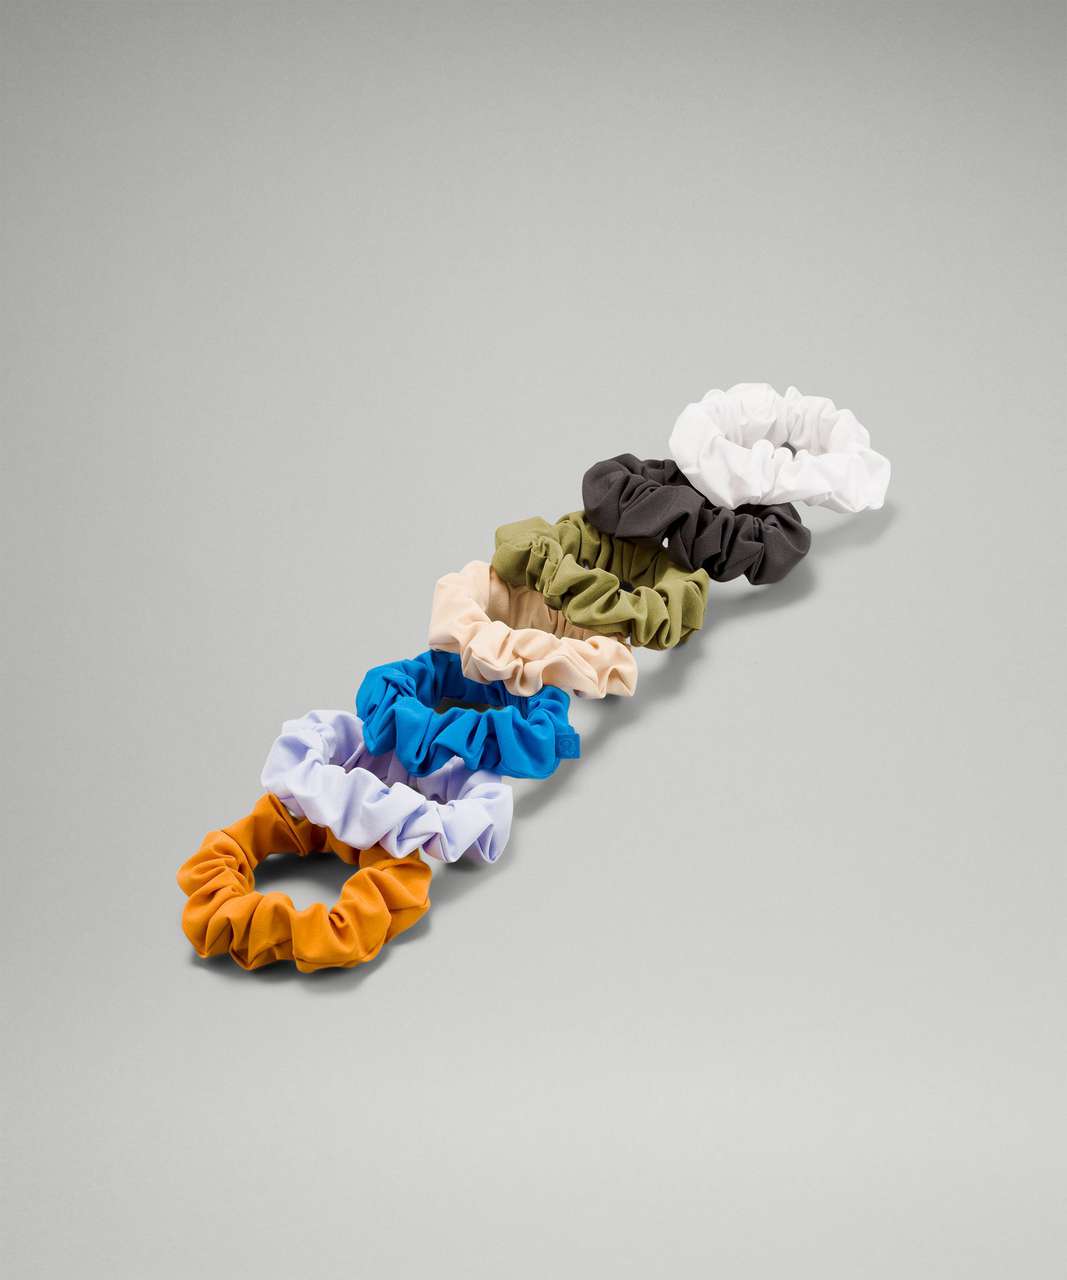 Lululemon Uplifting Scrunchie 7 Pack - Autumn Orange / Pastel Blue / Poolside / Prosecco / Bronze Green / Graphite Grey / White